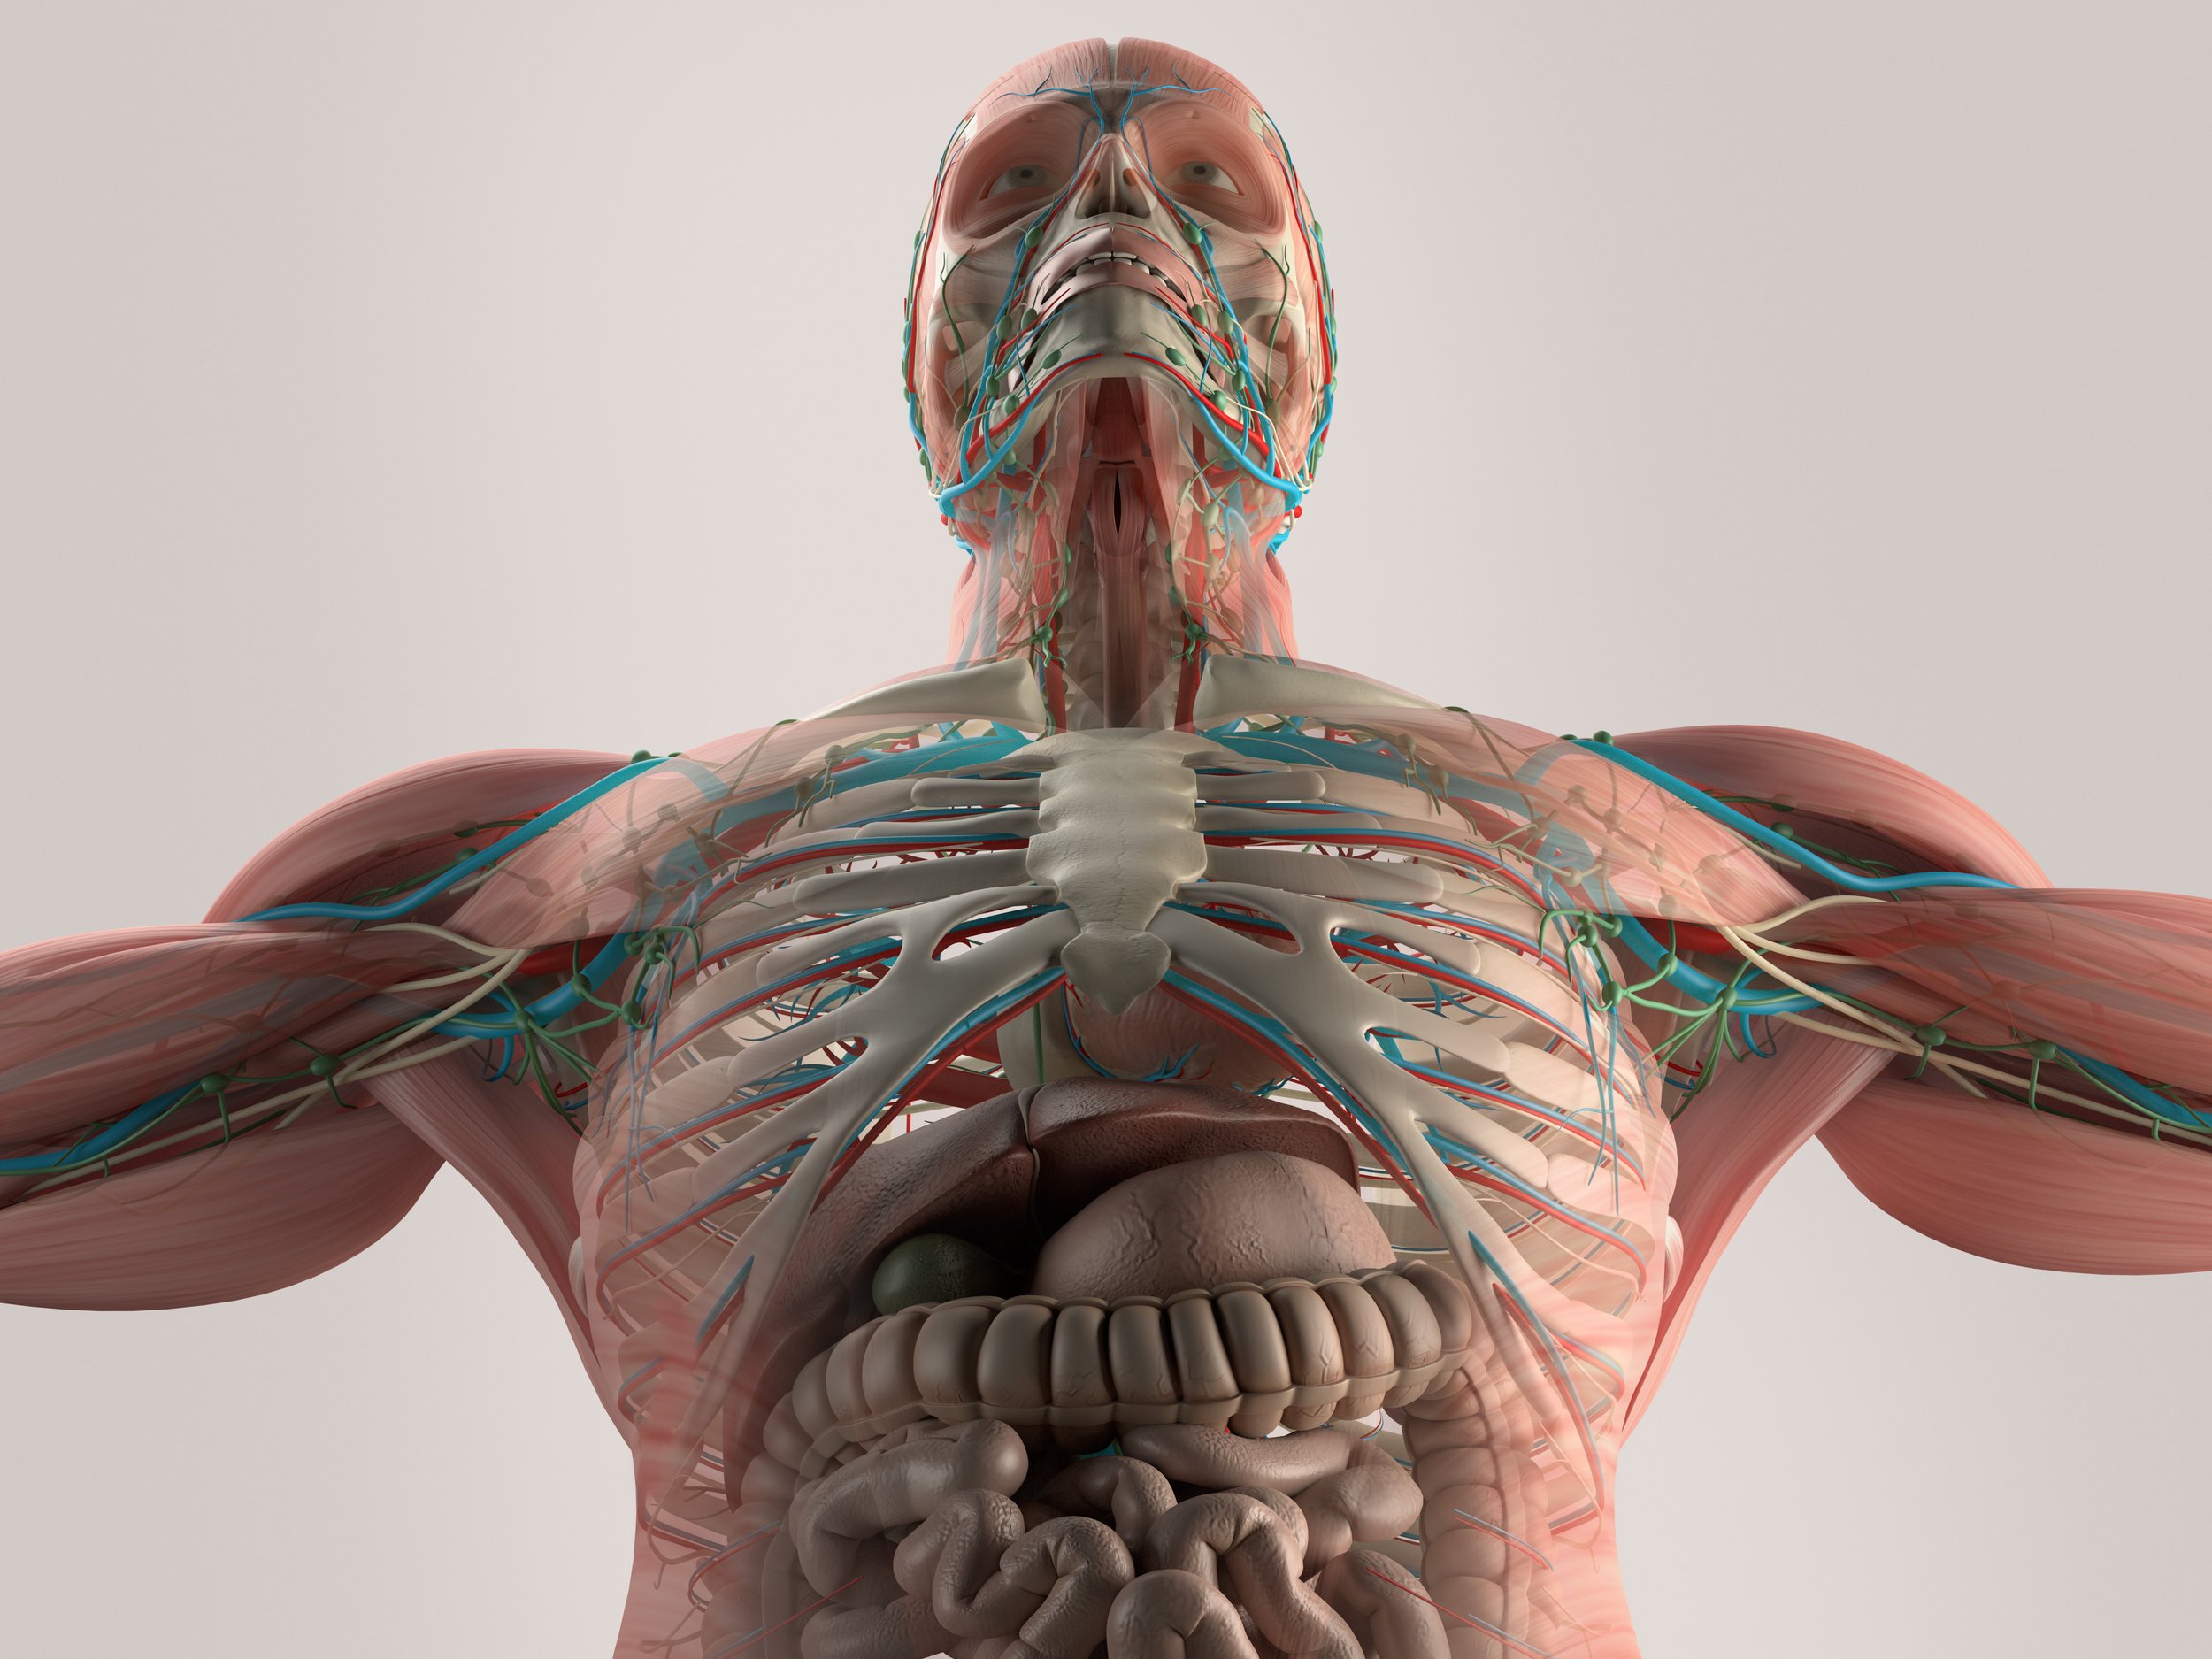 Части тела на груди. Анатомия человека. Тело человека. Организм человека. Внутренние органы человека 3д.